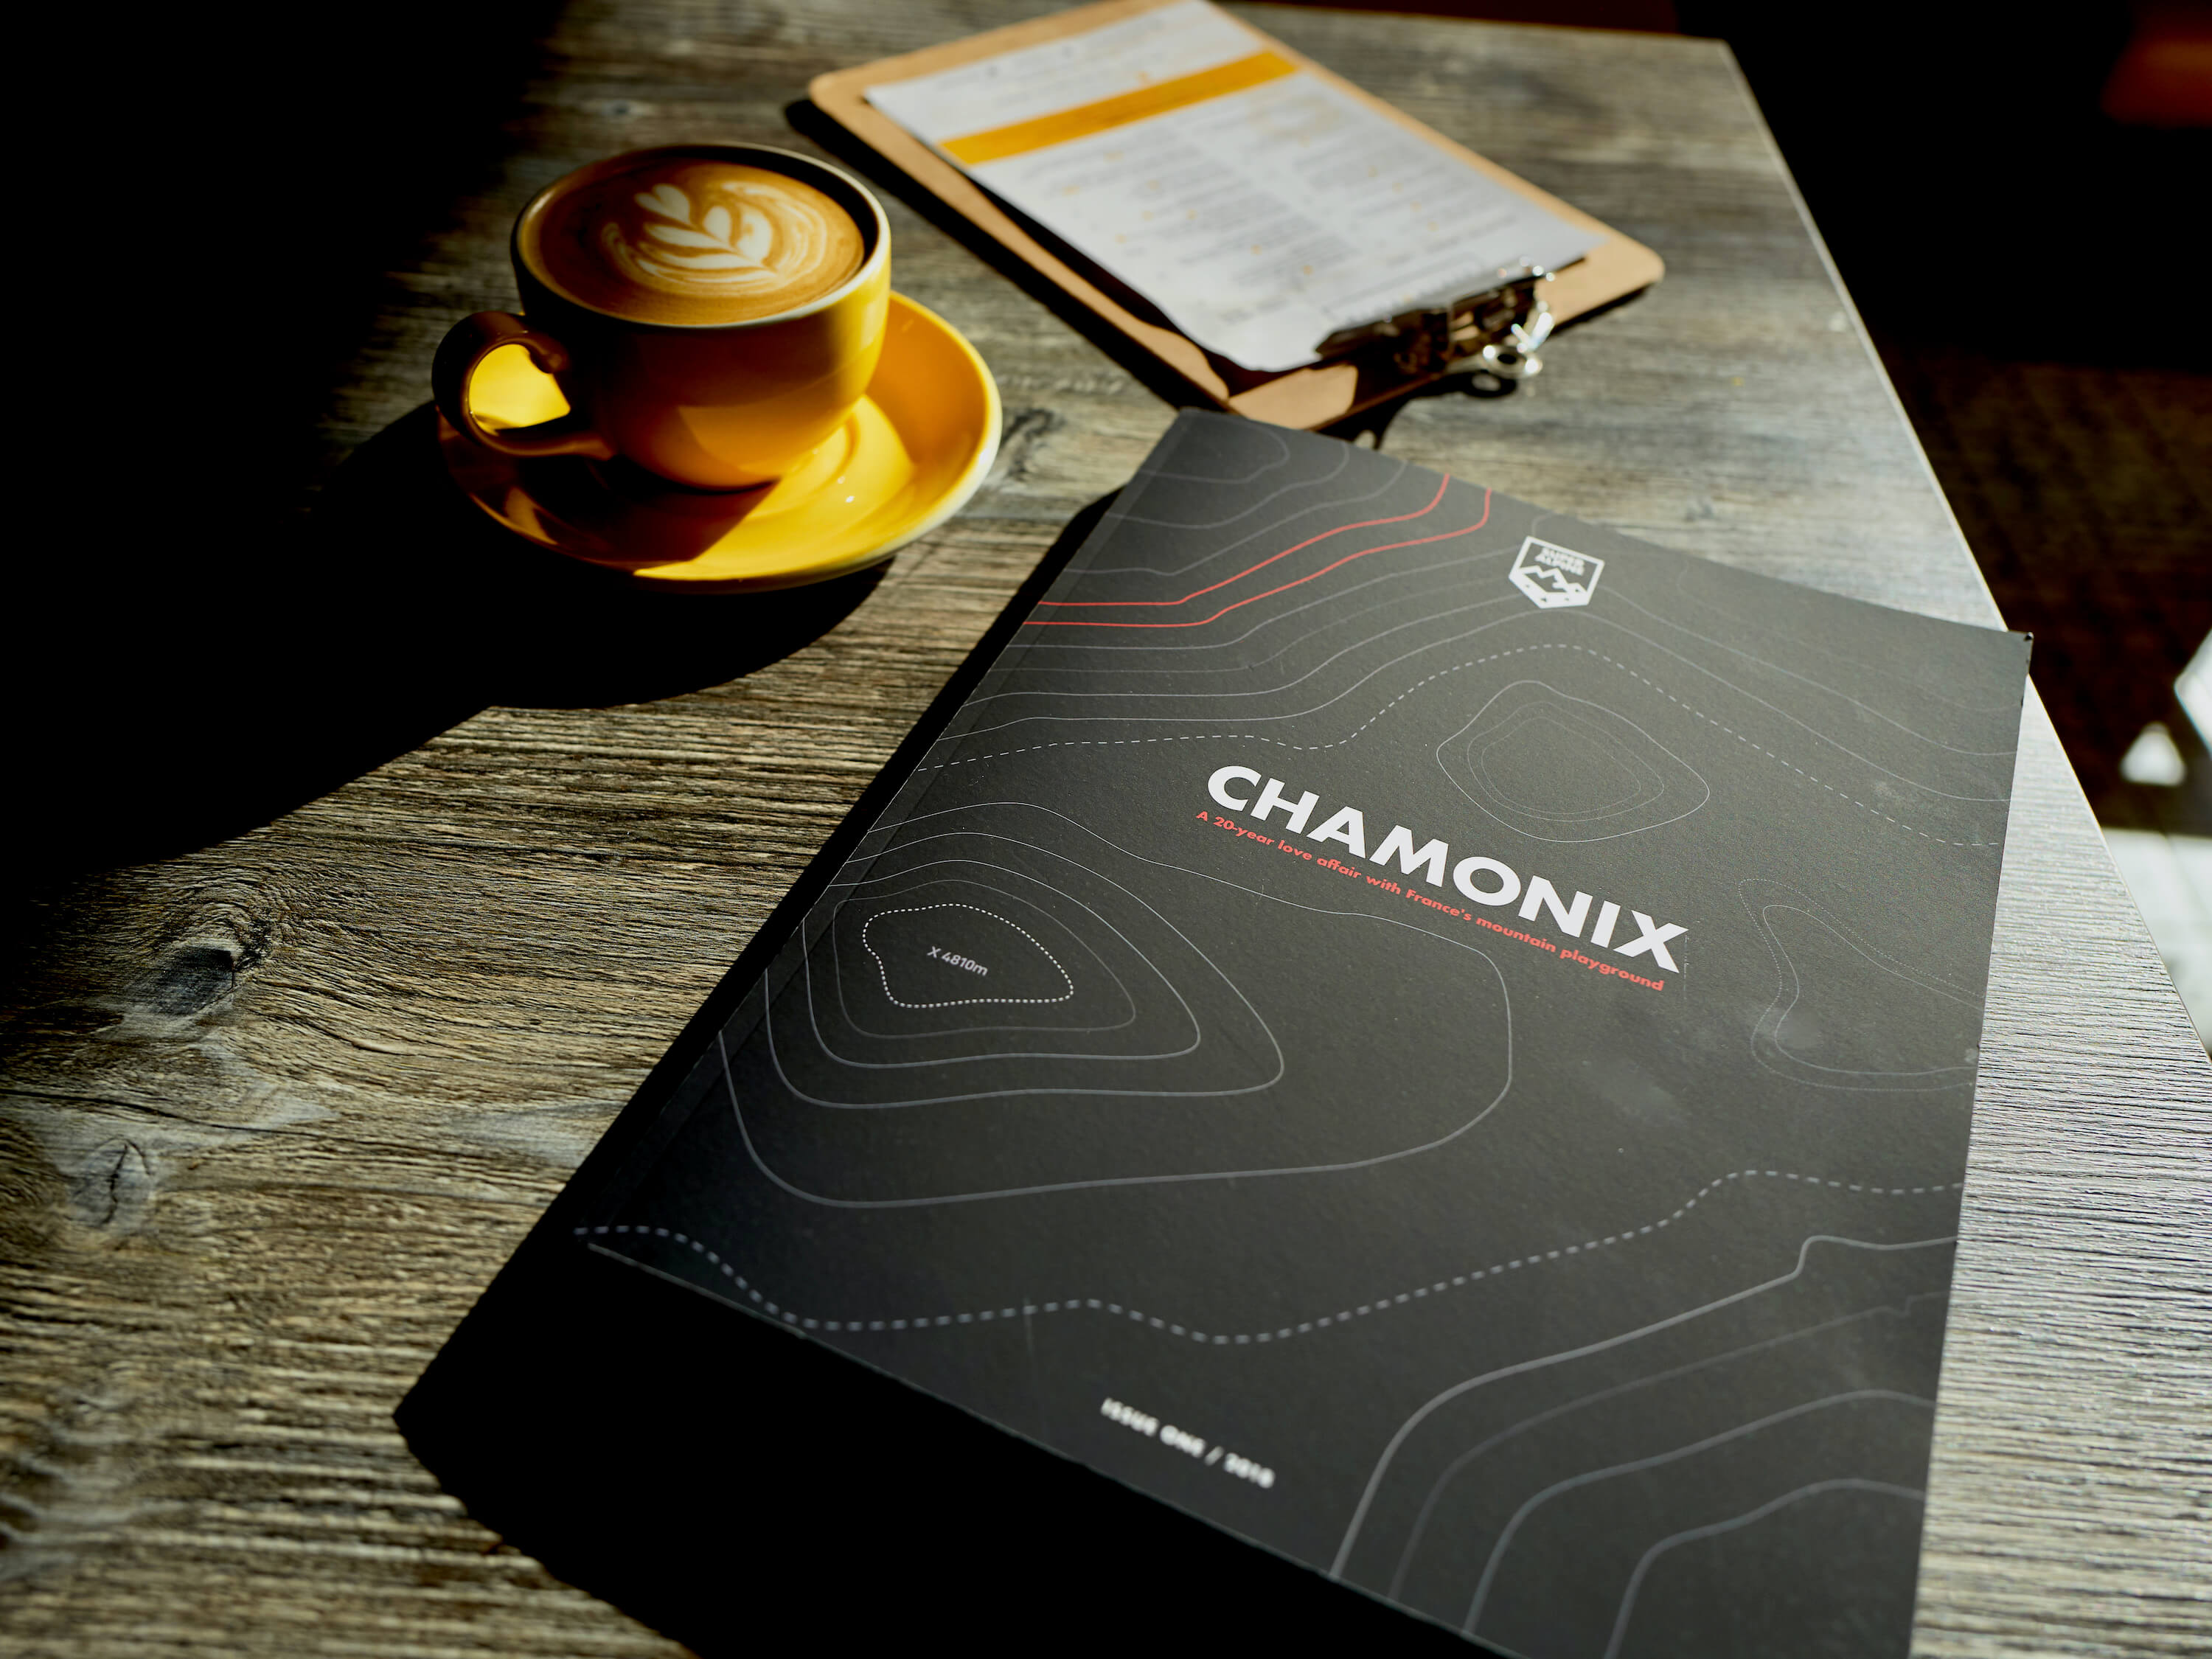 Chamonix magazine